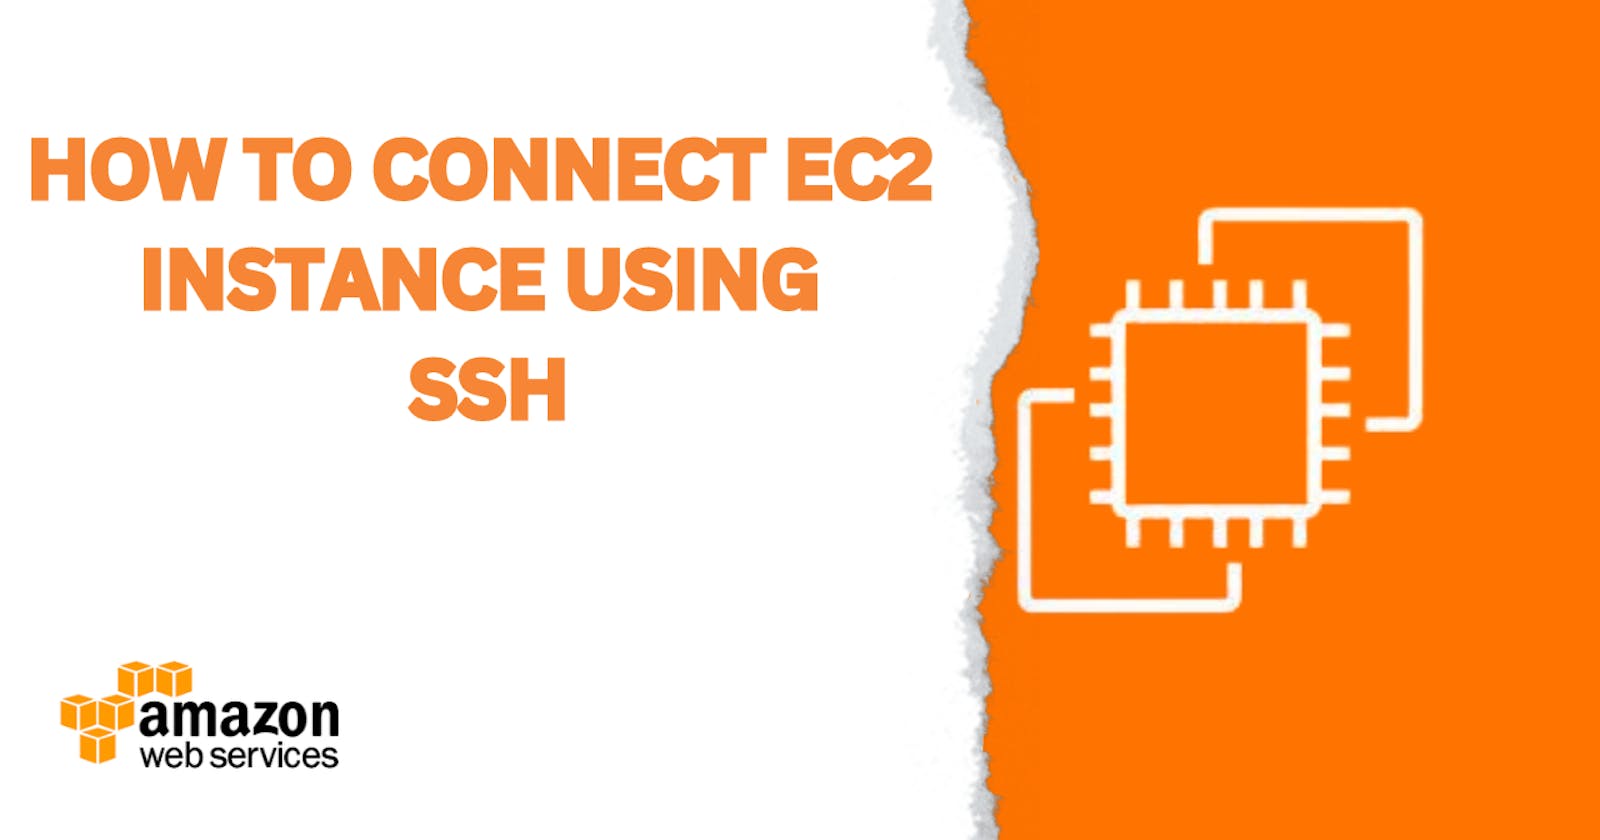 Connecting to Amazon EC2 Instances Using SSH